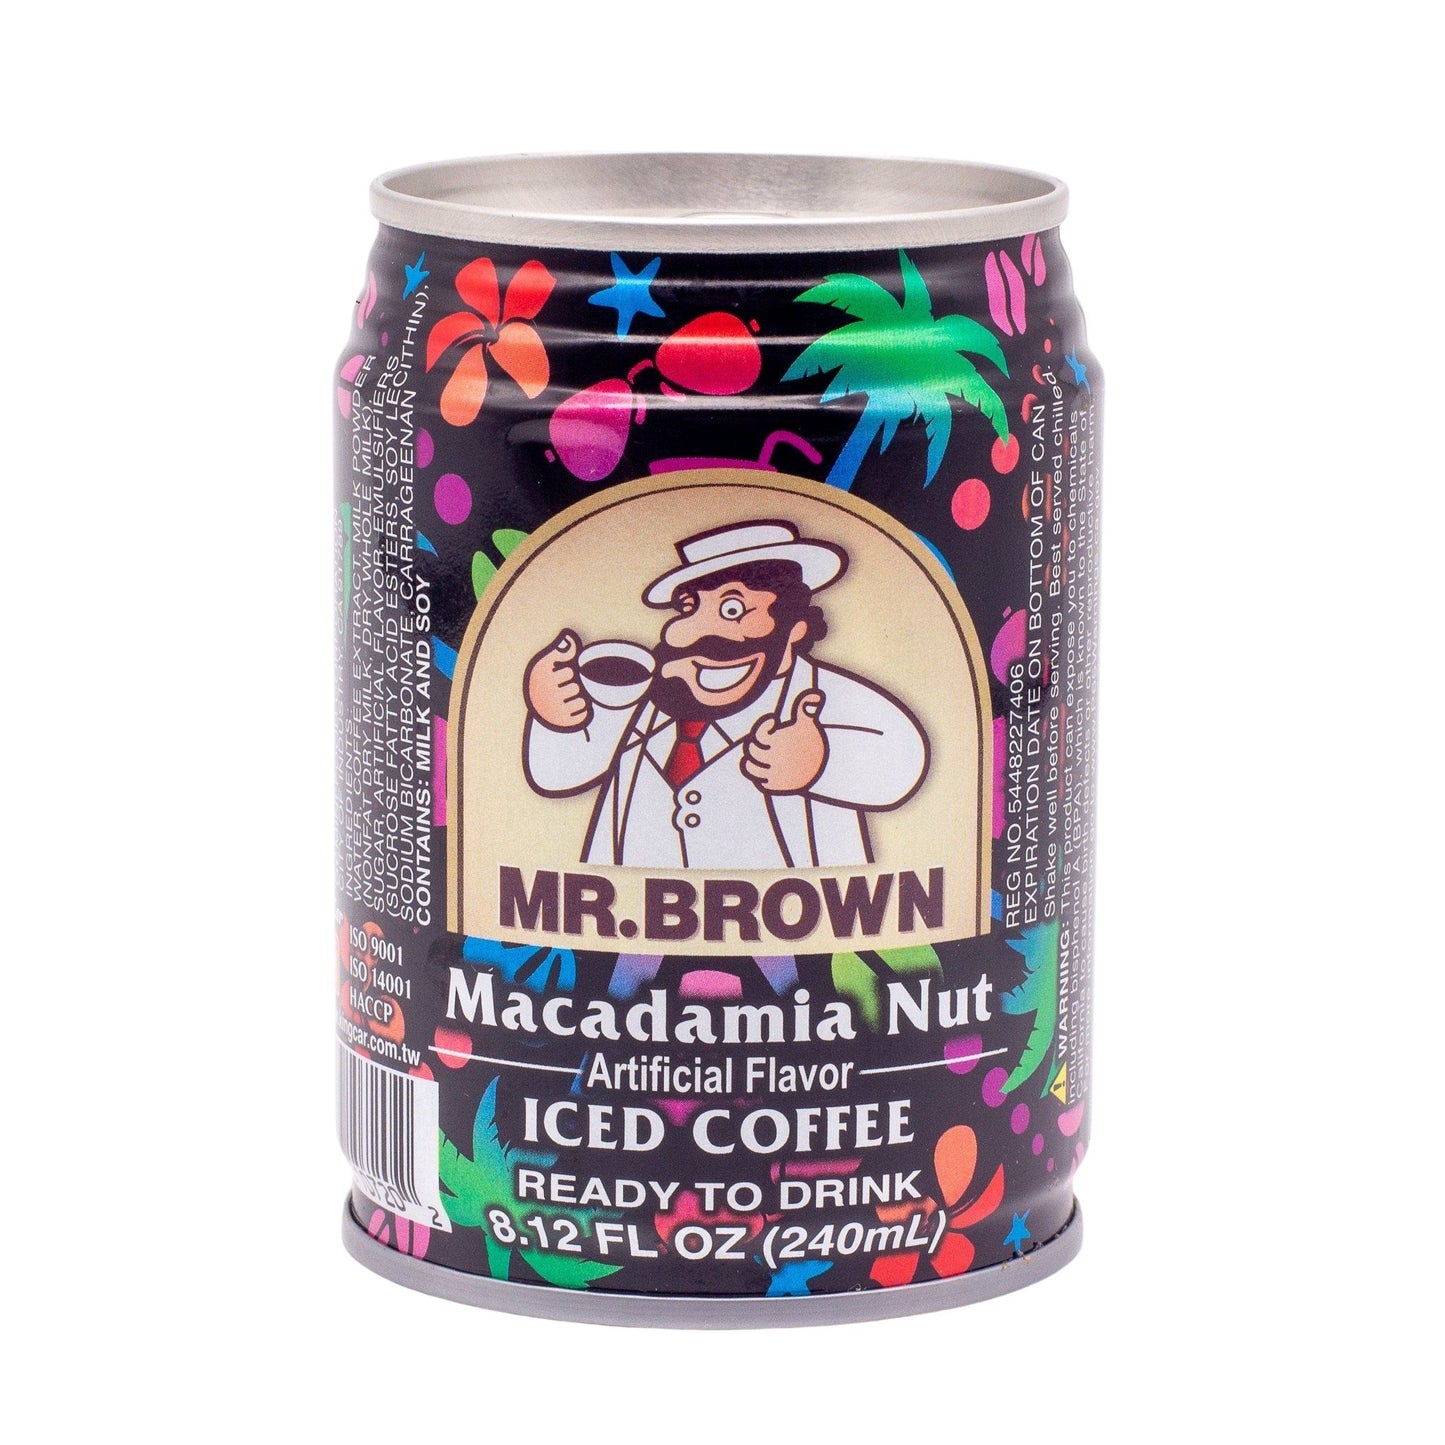 Mr. Brown Macadamia Nut Iced Coffee (8.12 OZ)